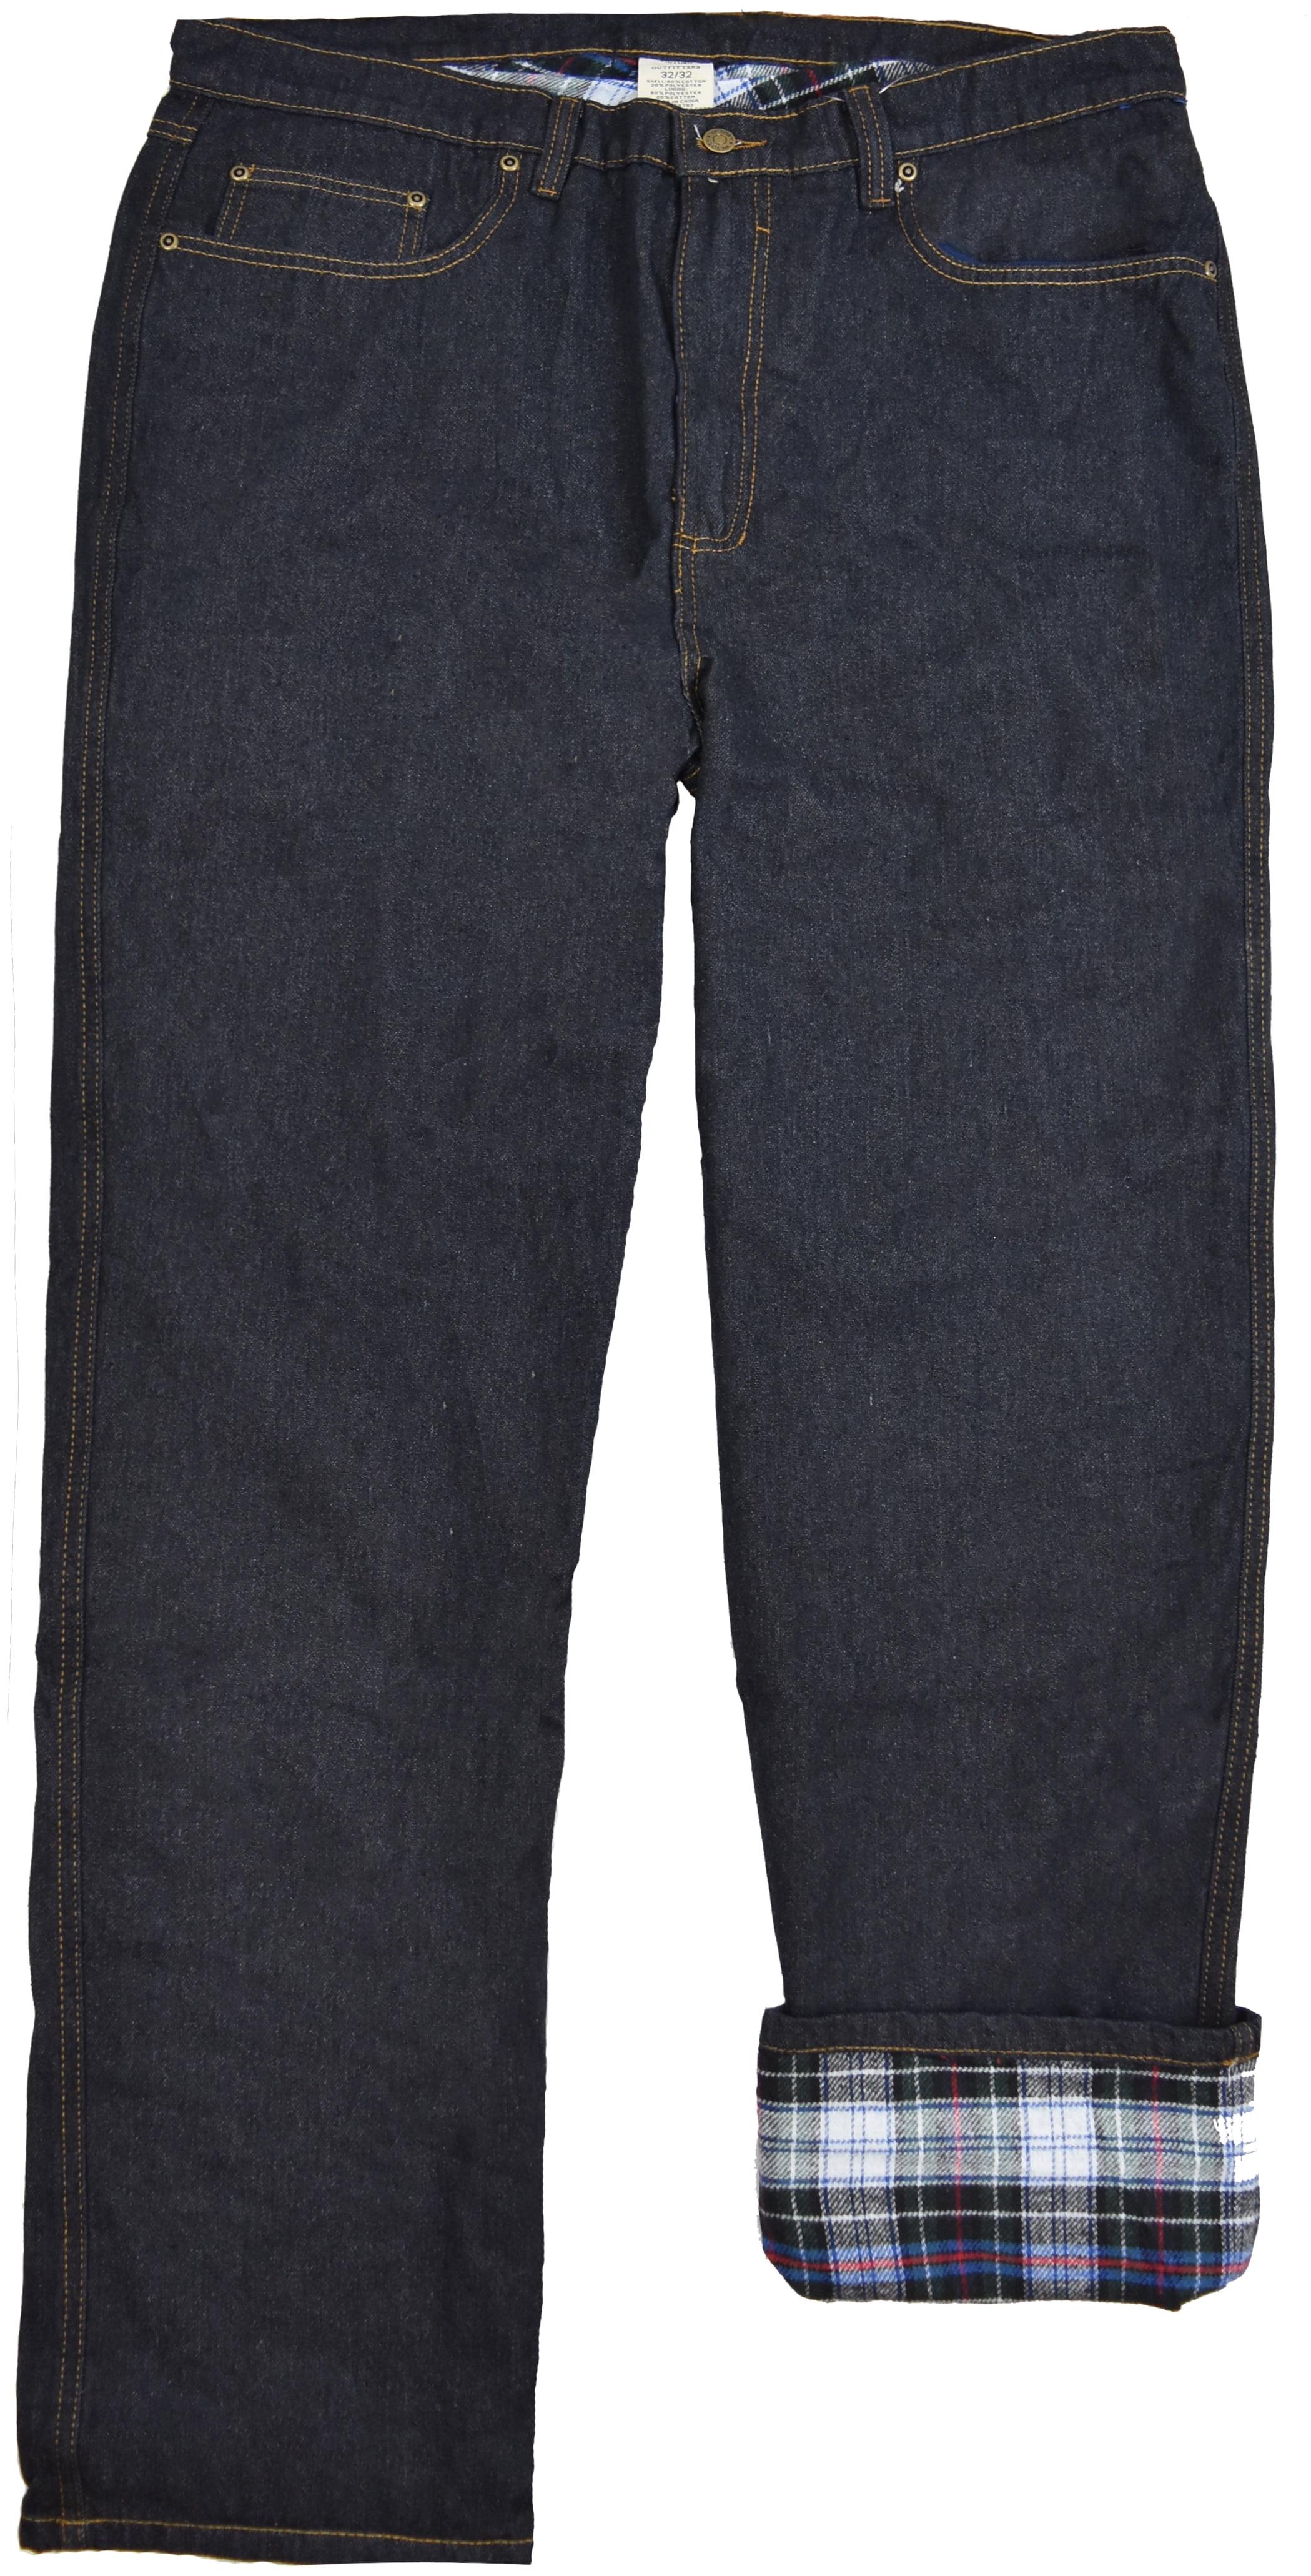 J45 Stone-washed denim jeans | EMPORIO ARMANI Man